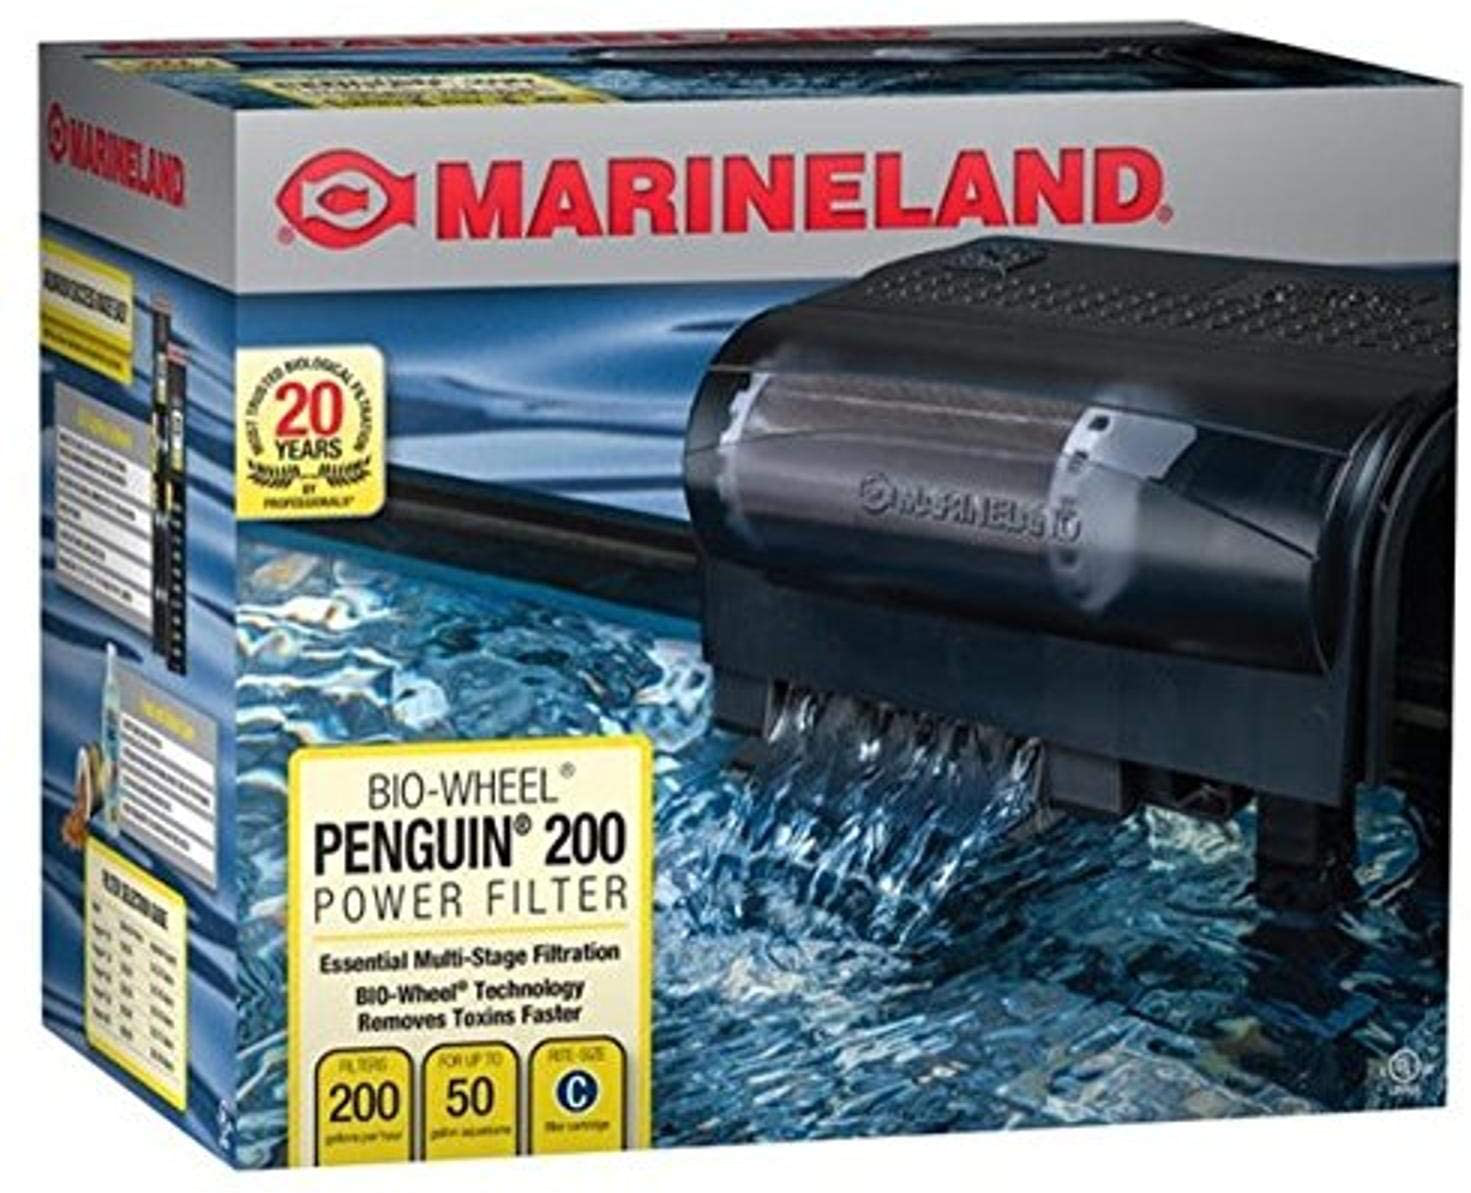 Marineland Penguin Bio-Wheel Power Filter Animals & Pet Supplies > Pet Supplies > Fish Supplies > Aquarium Filters MarineLand 30 - 50 Gallon Aquarium, 200 GPH  